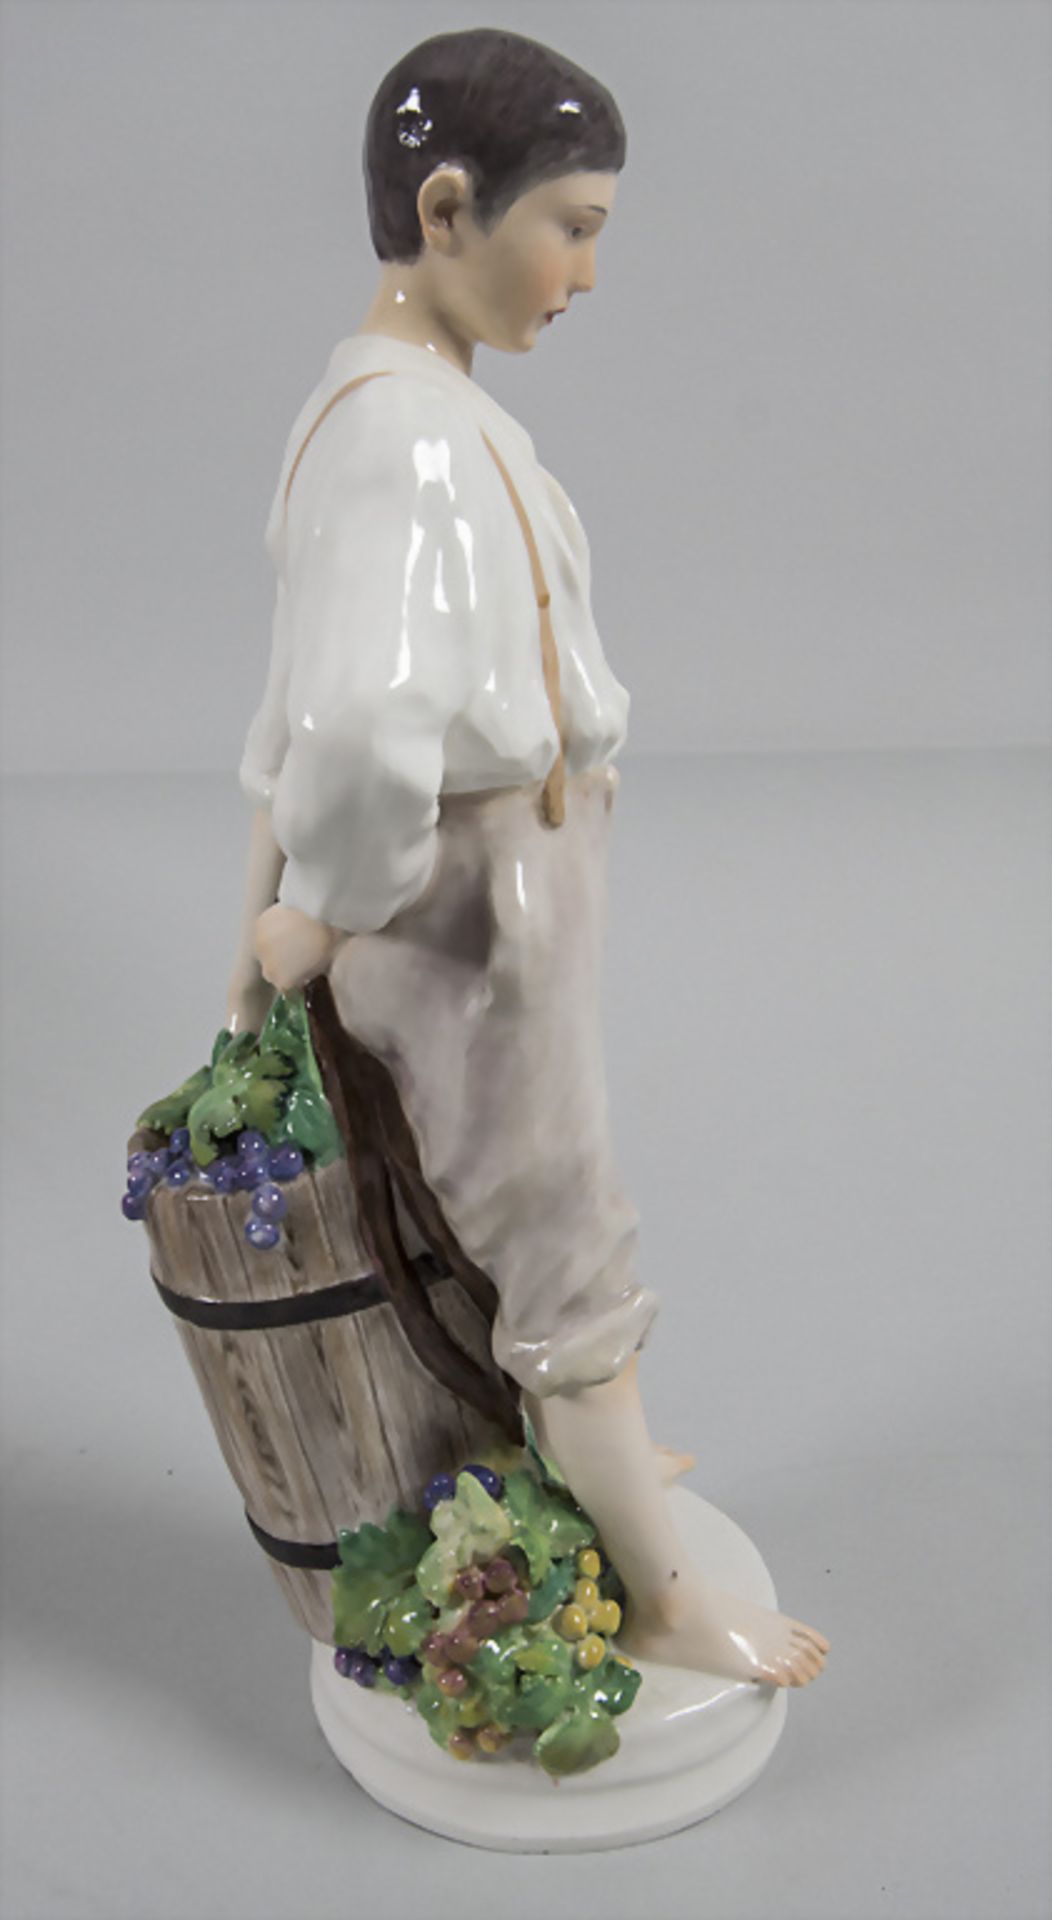 Jugendstil Figur 'Winzerknabe' / An Art Nouveau figurine of a young winemaker, Theodor ... - Image 4 of 5